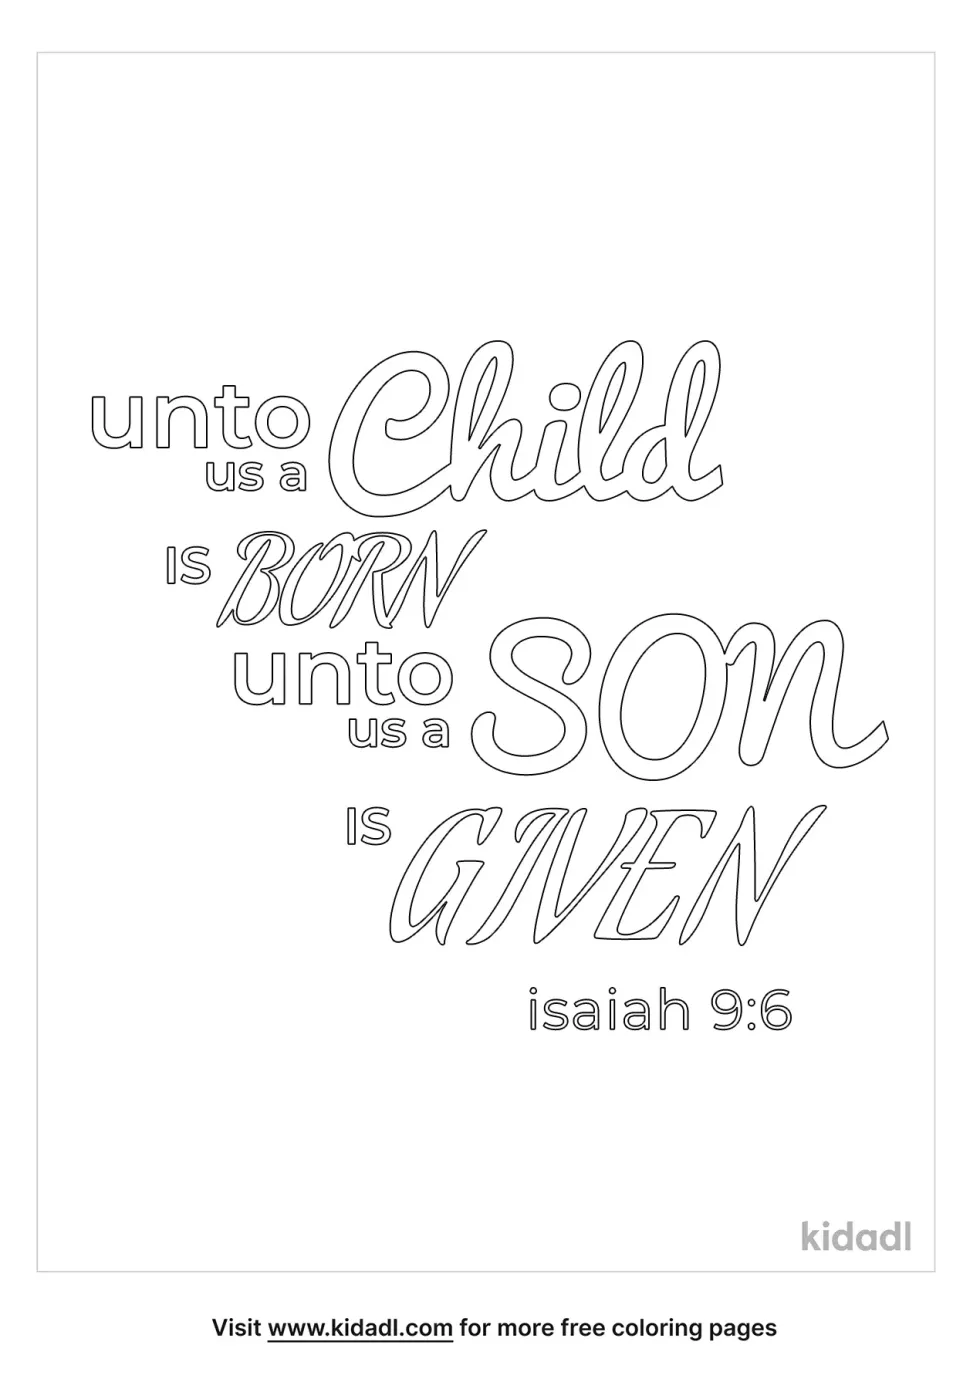 Isaiah 9:6 Coloring Page